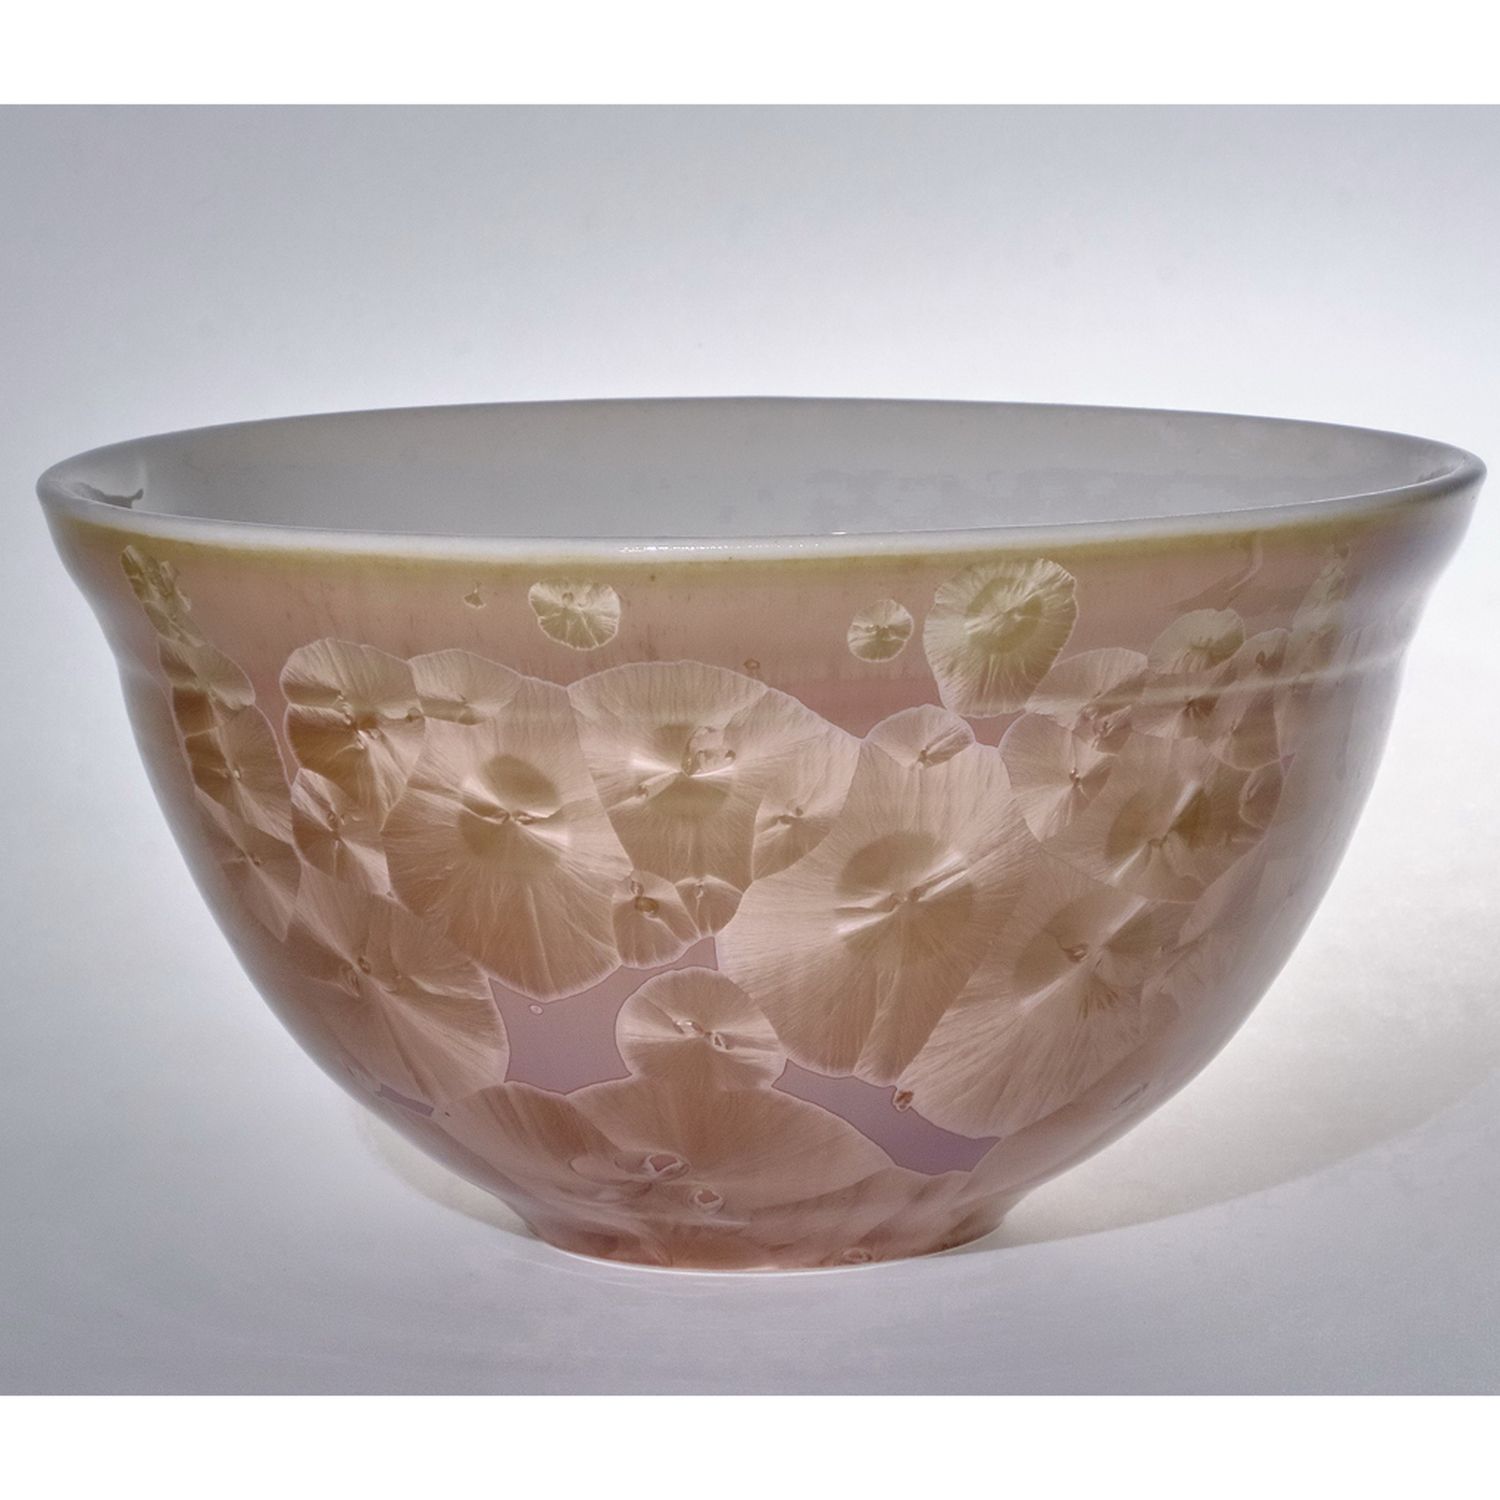 Yumiko Katsuya: Dark Pink Bowl Product Image 1 of 2